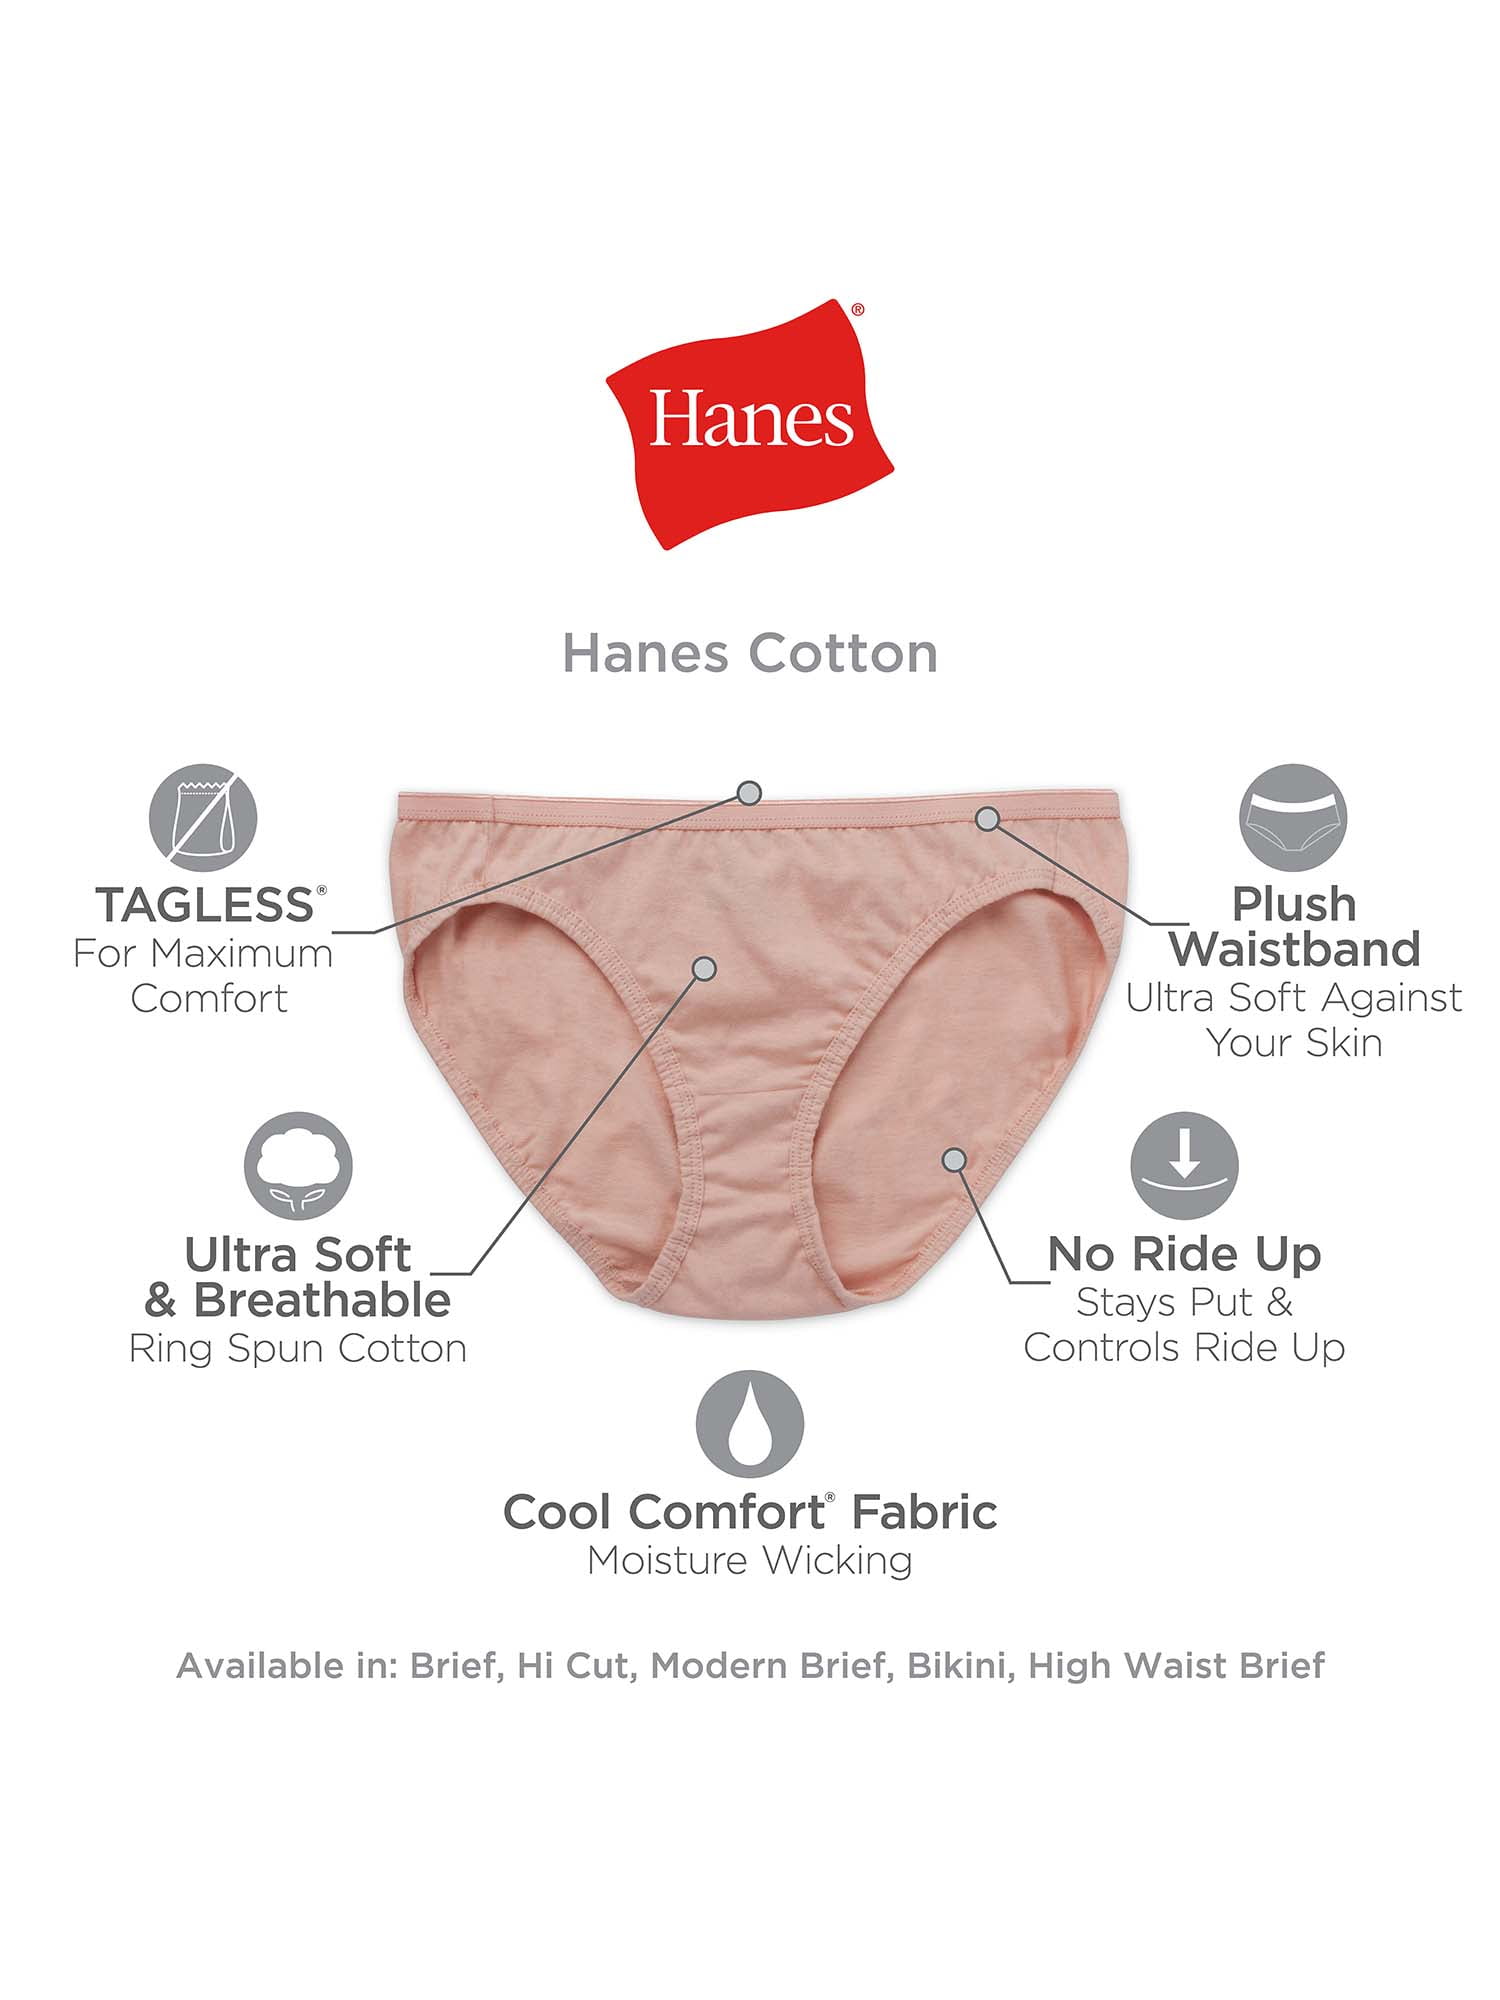 2 Packs of 6pcs Hanes Bikini Cotton Women Panties Underwear in